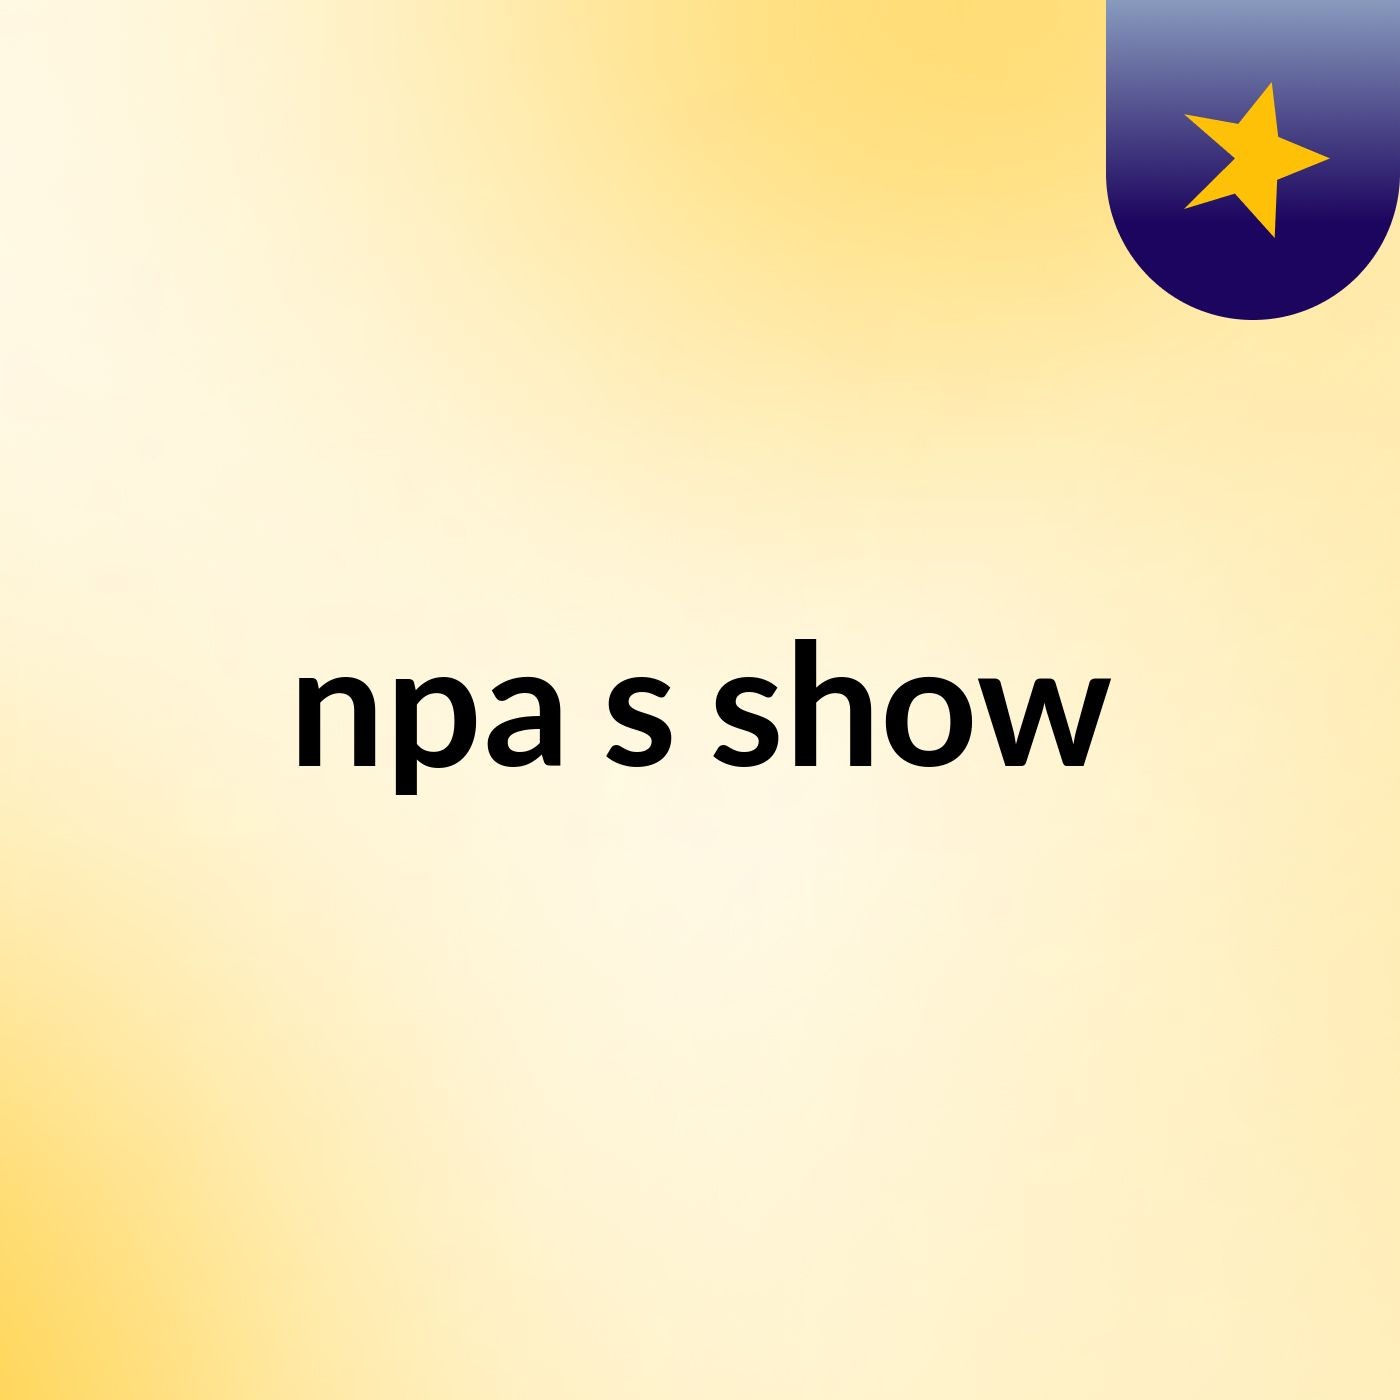 npa's show